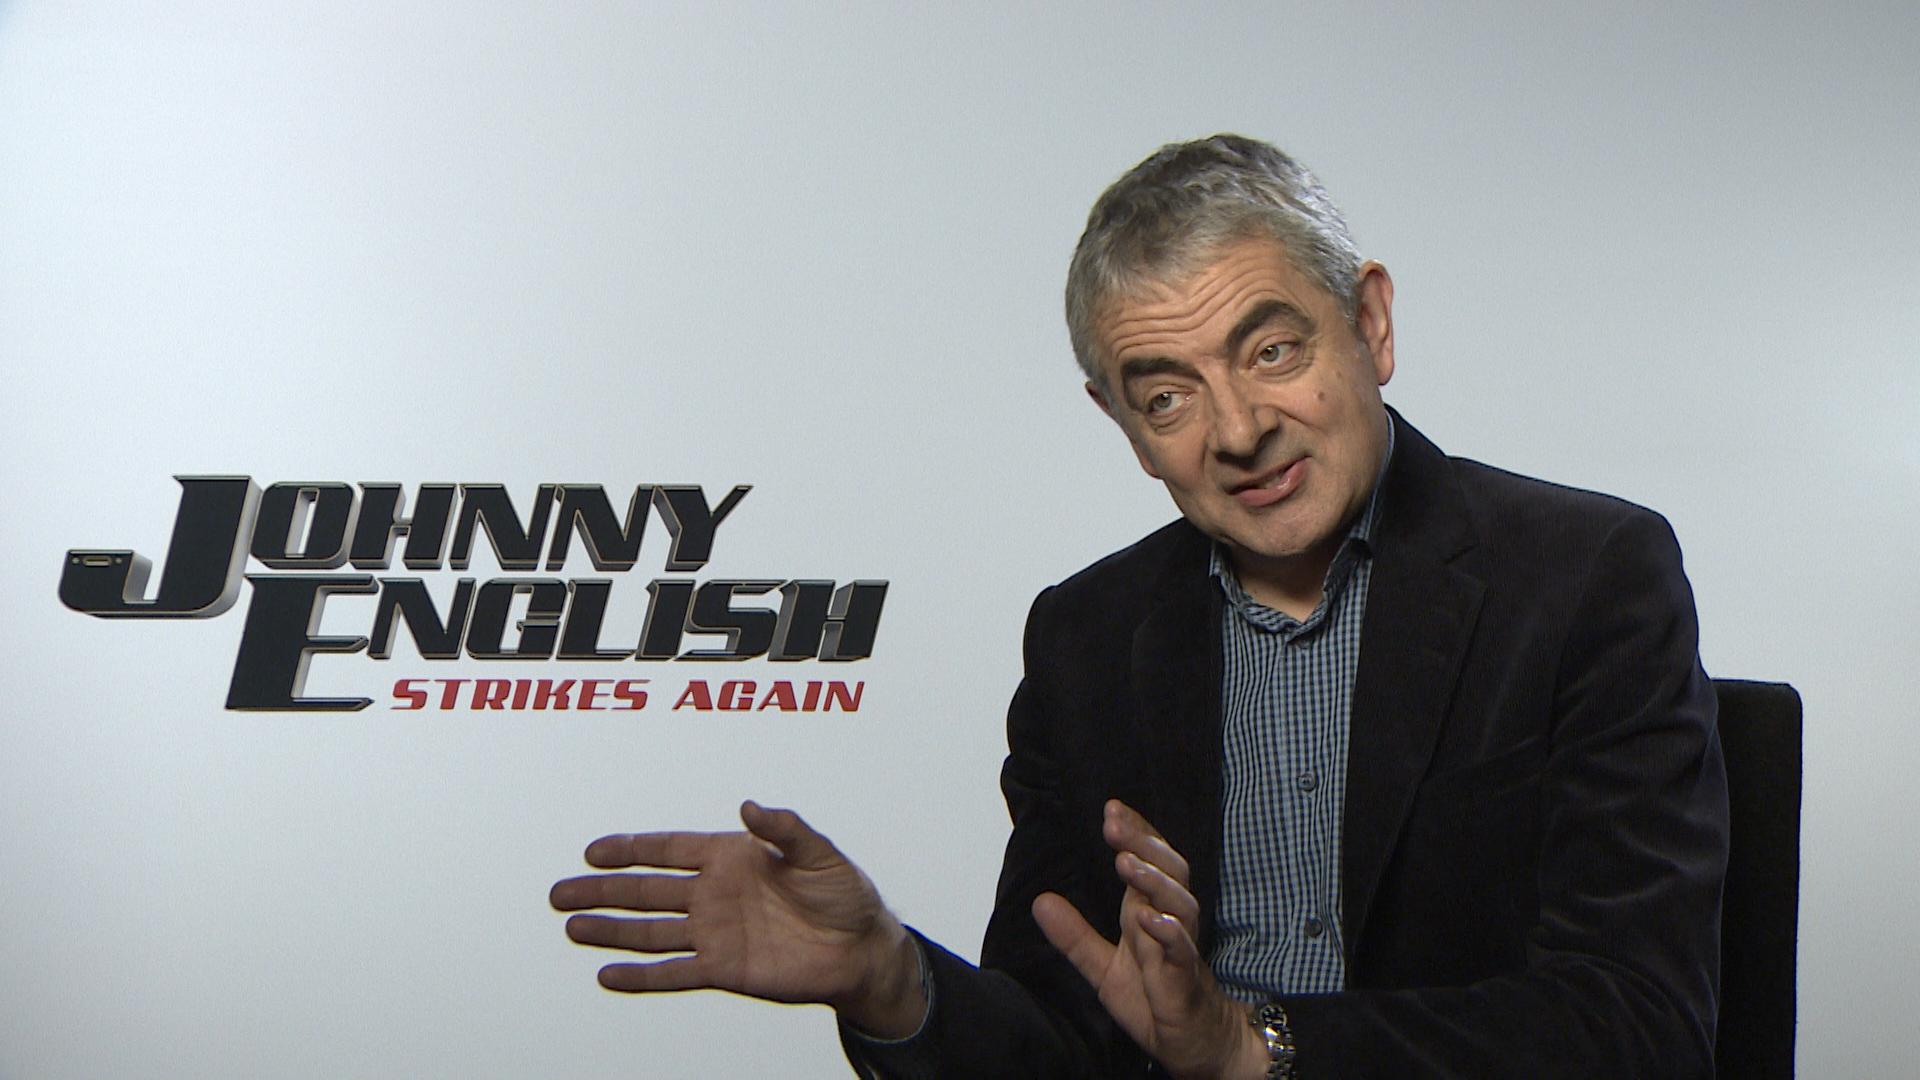 Rowan Atkinson on making timeless comedy. Johnny English Strikes Again